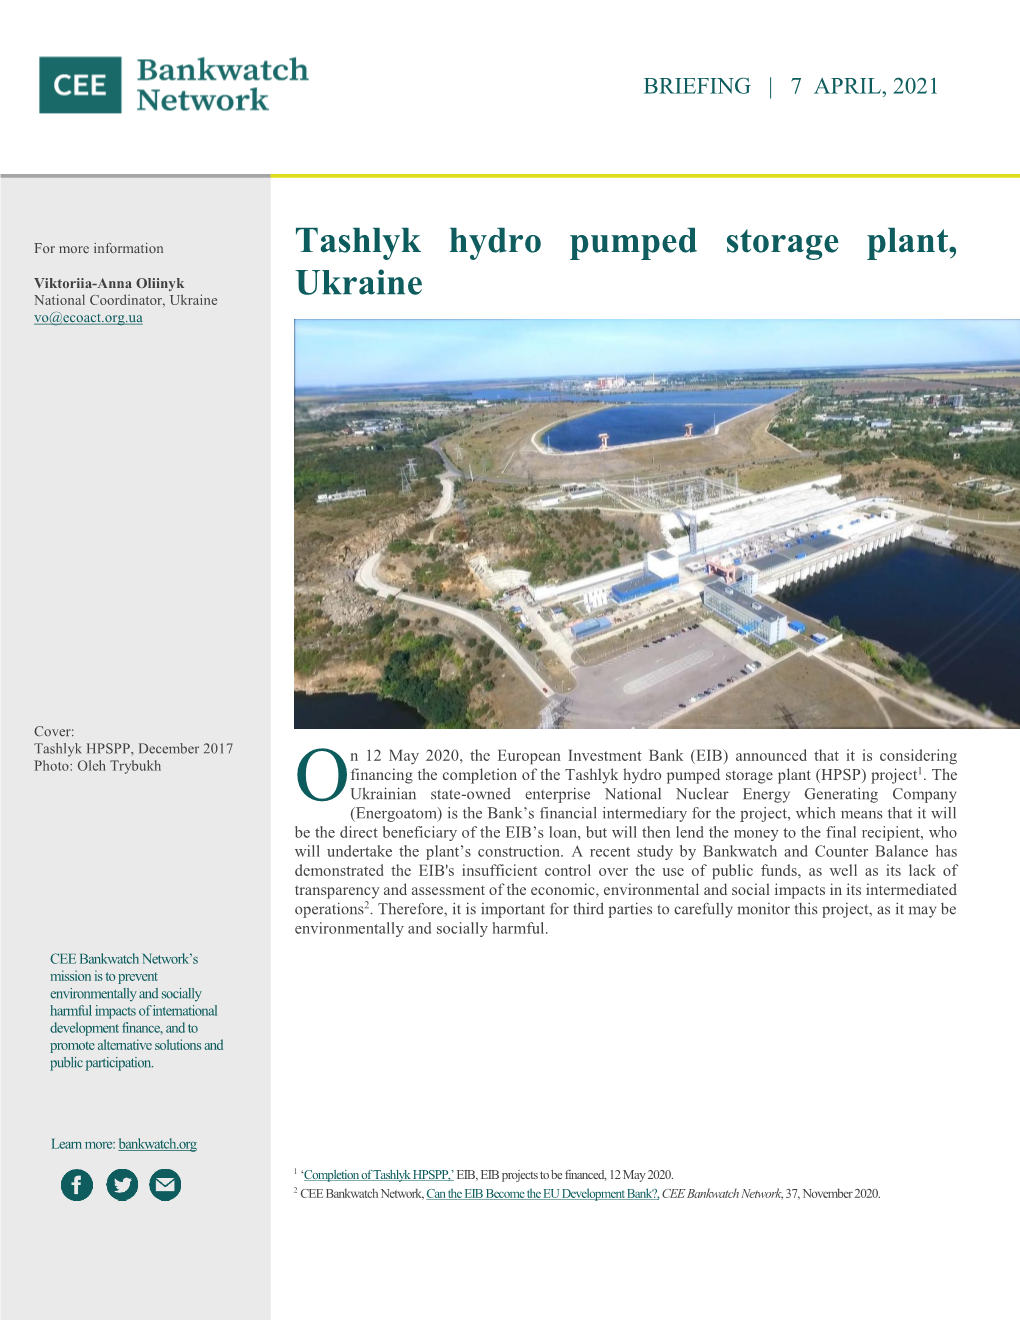 Tashlyk Hydro Pumped Storage Plant, Ukraine